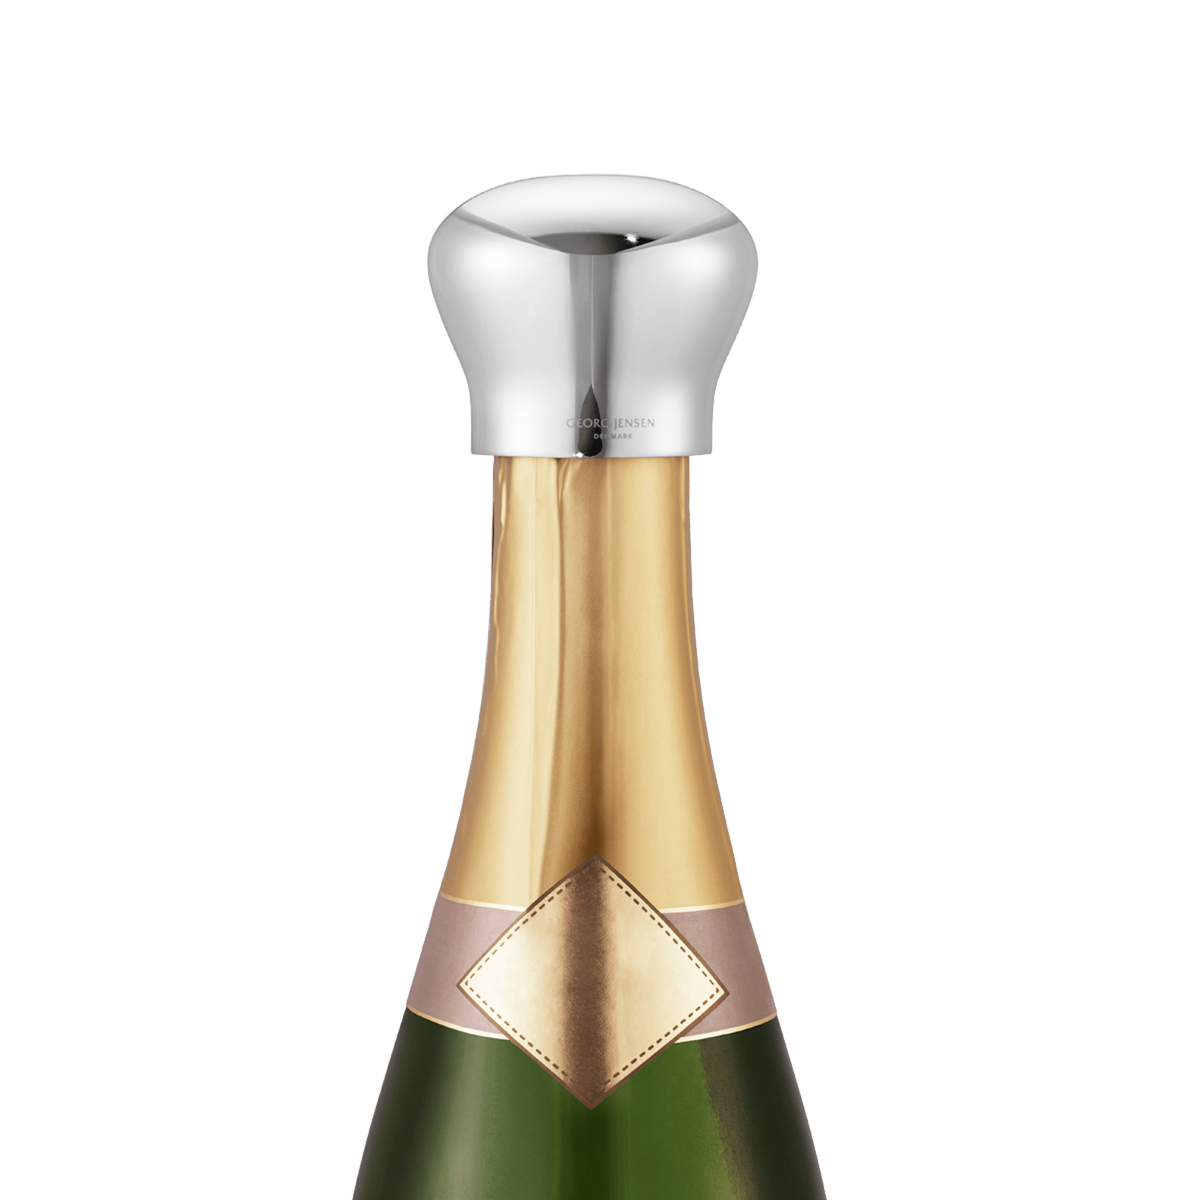 Sky Champagne Stopper by Georg Jensen